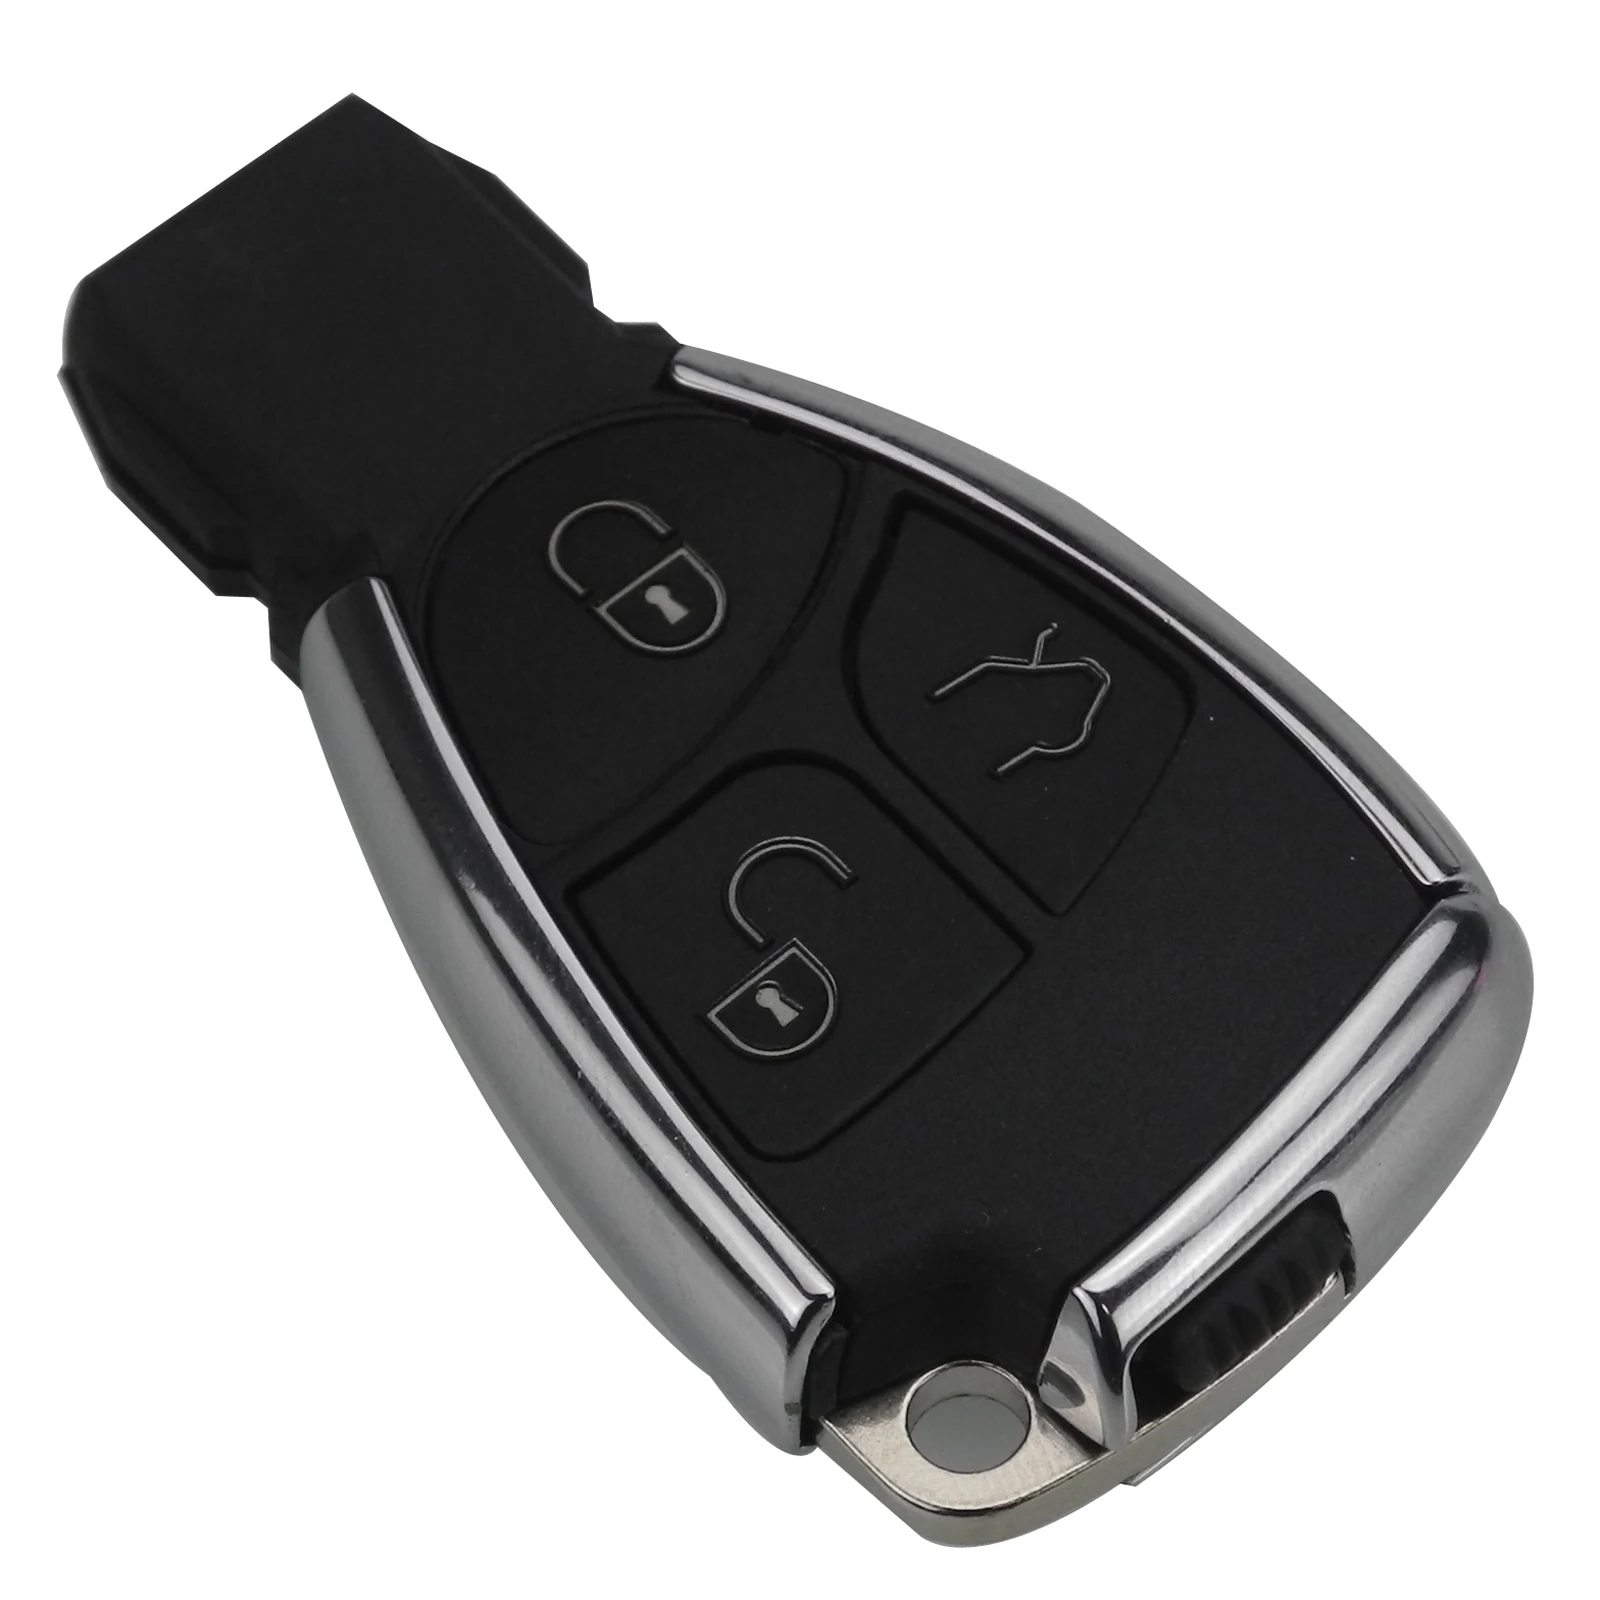 Jingyuqin 5ps 3B Дистанционный Автоматический смарт-чехол для ключей для Mercedes Benz B C E ML S CLK CL GL W211 хромированный стиль с держателем батареи